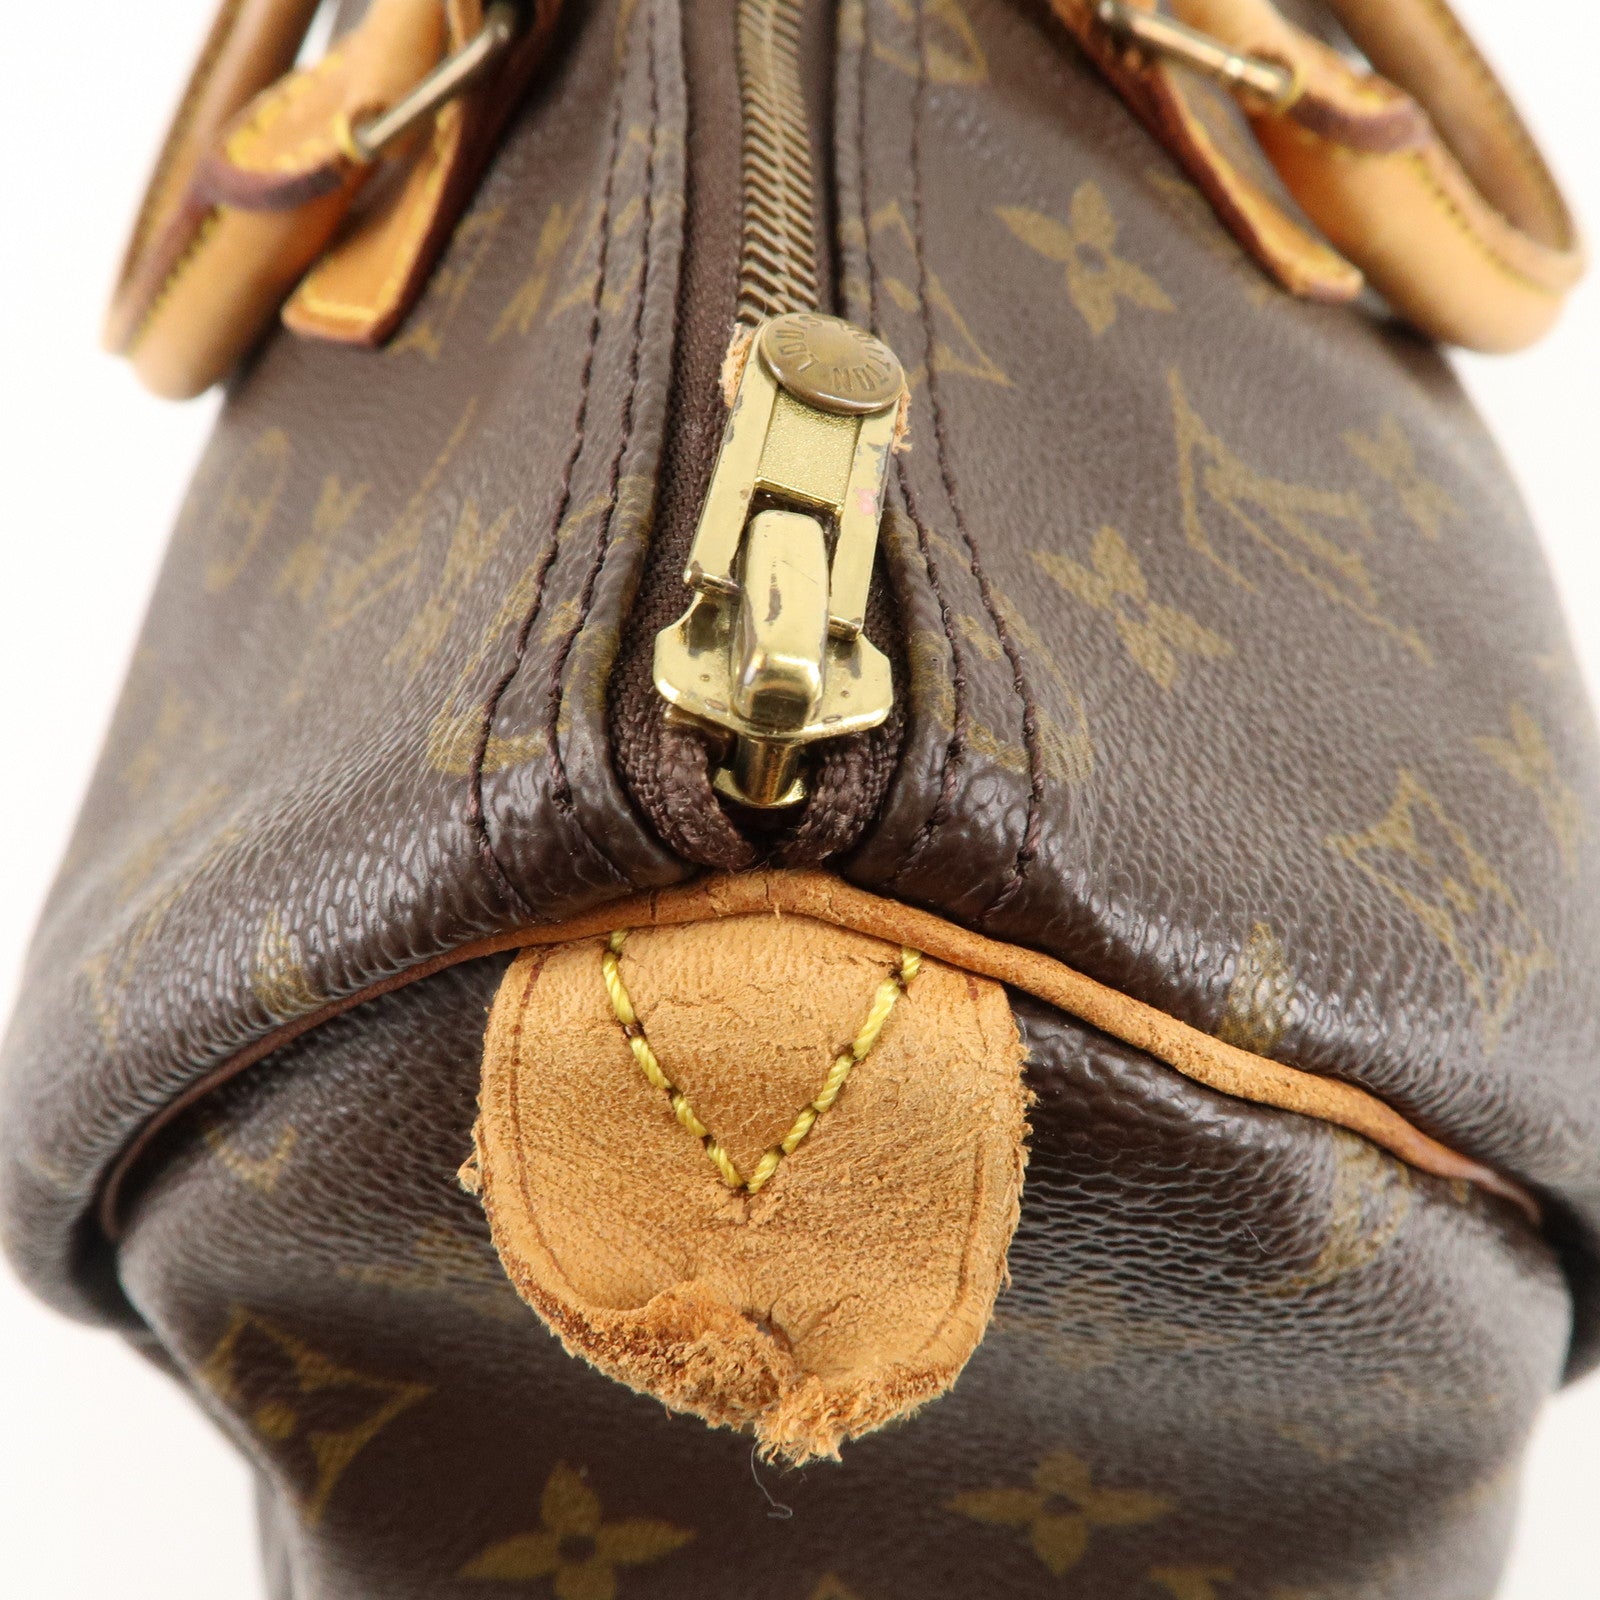 Louis-Vuitton-Monogram-Speedy-35-Hand-Bag-Boston-Bag-M41524 – dct